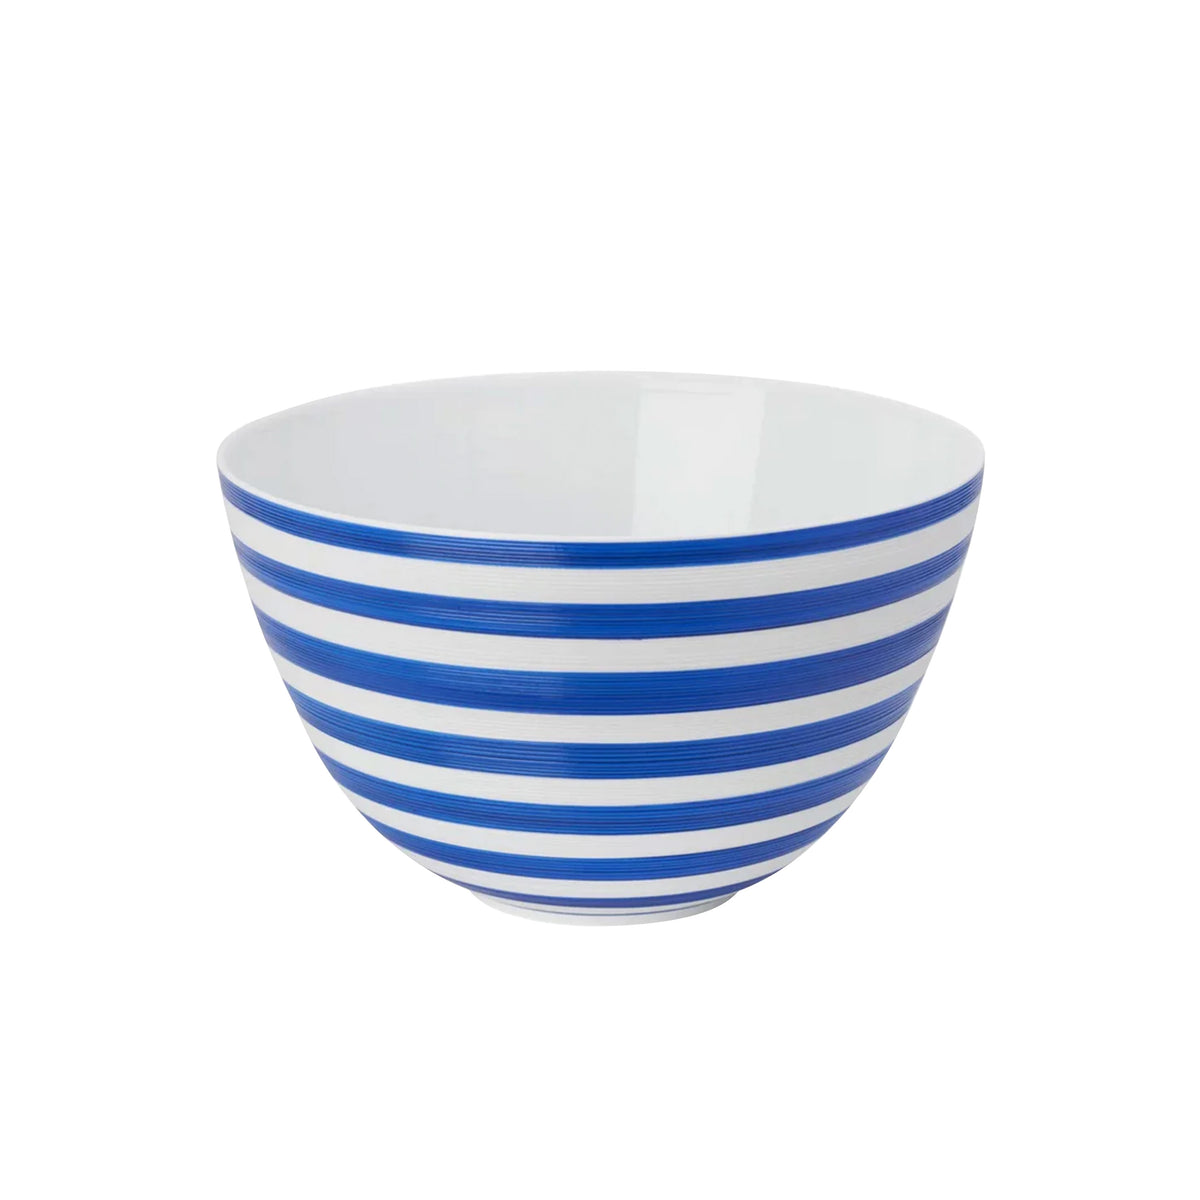 HEMISPHERE Striped Royal Blue - Salad serving bowl, medium